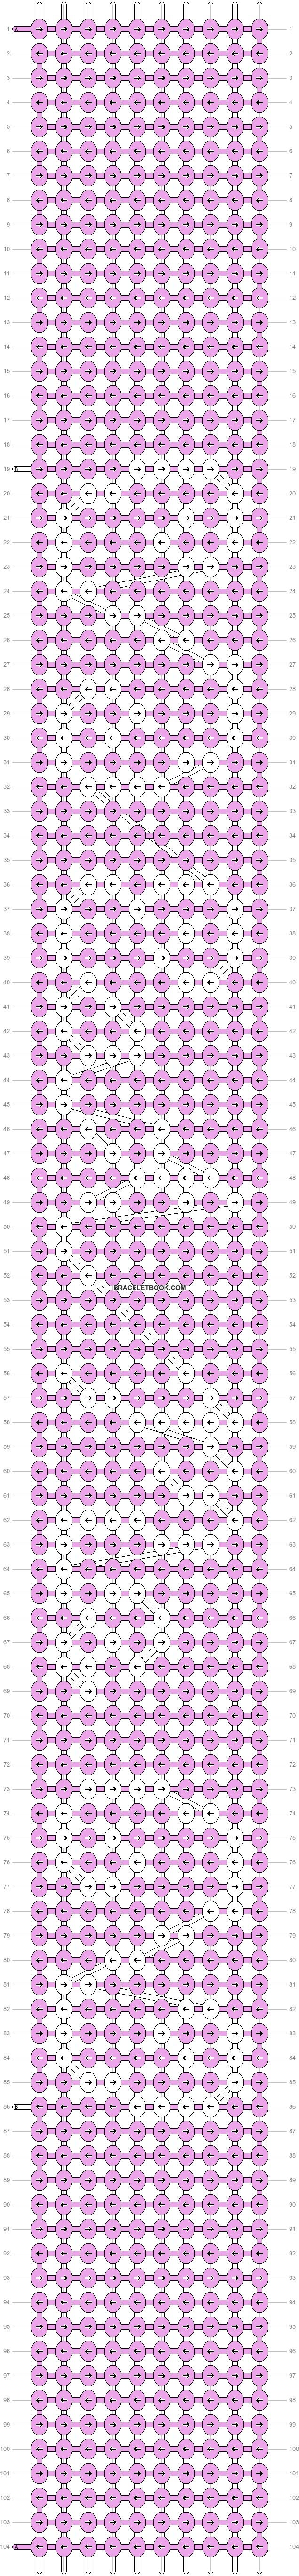 Alpha pattern #1505 variation #158021 pattern